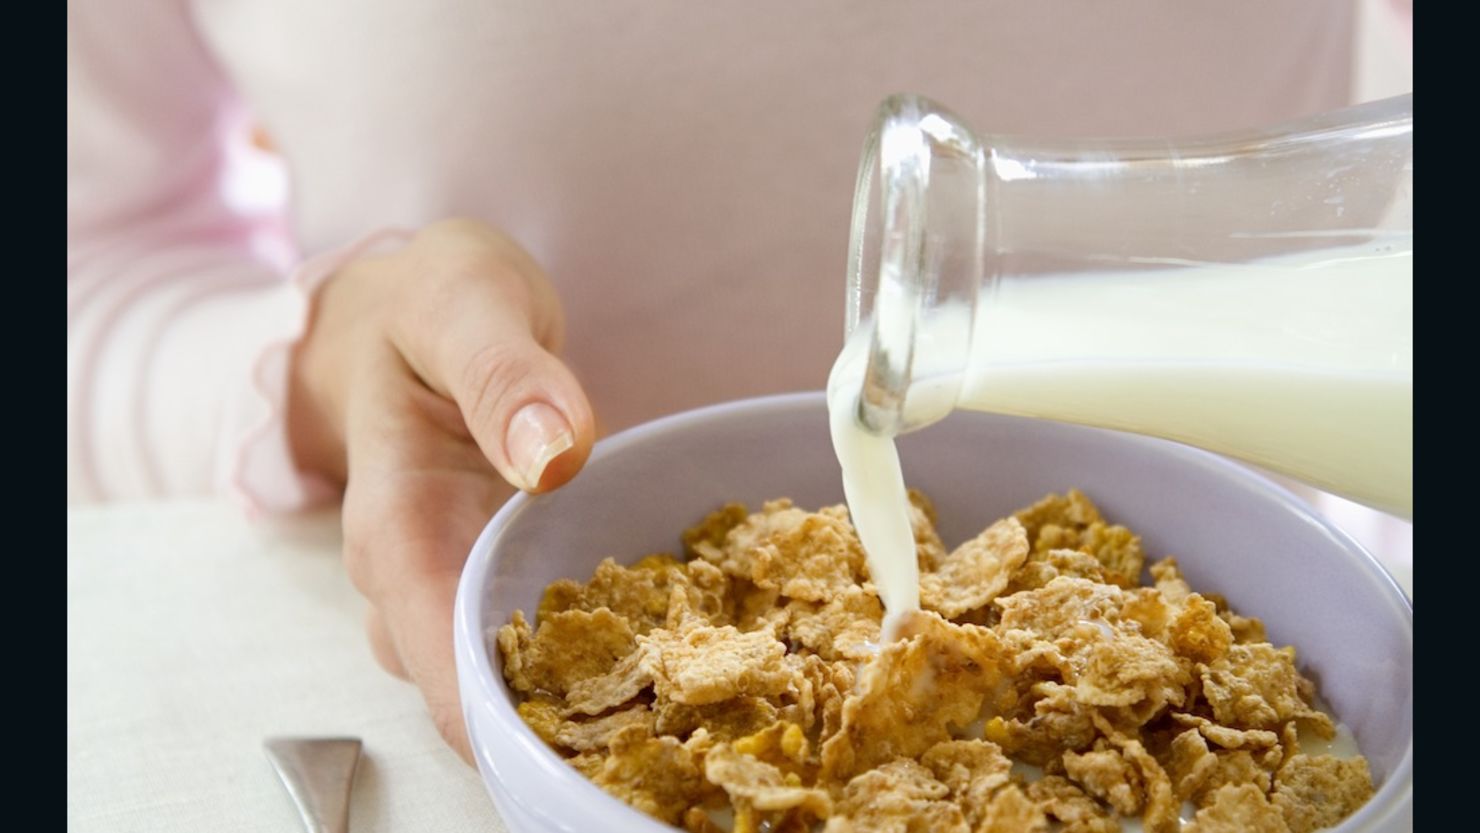 Cereal milk, transformed